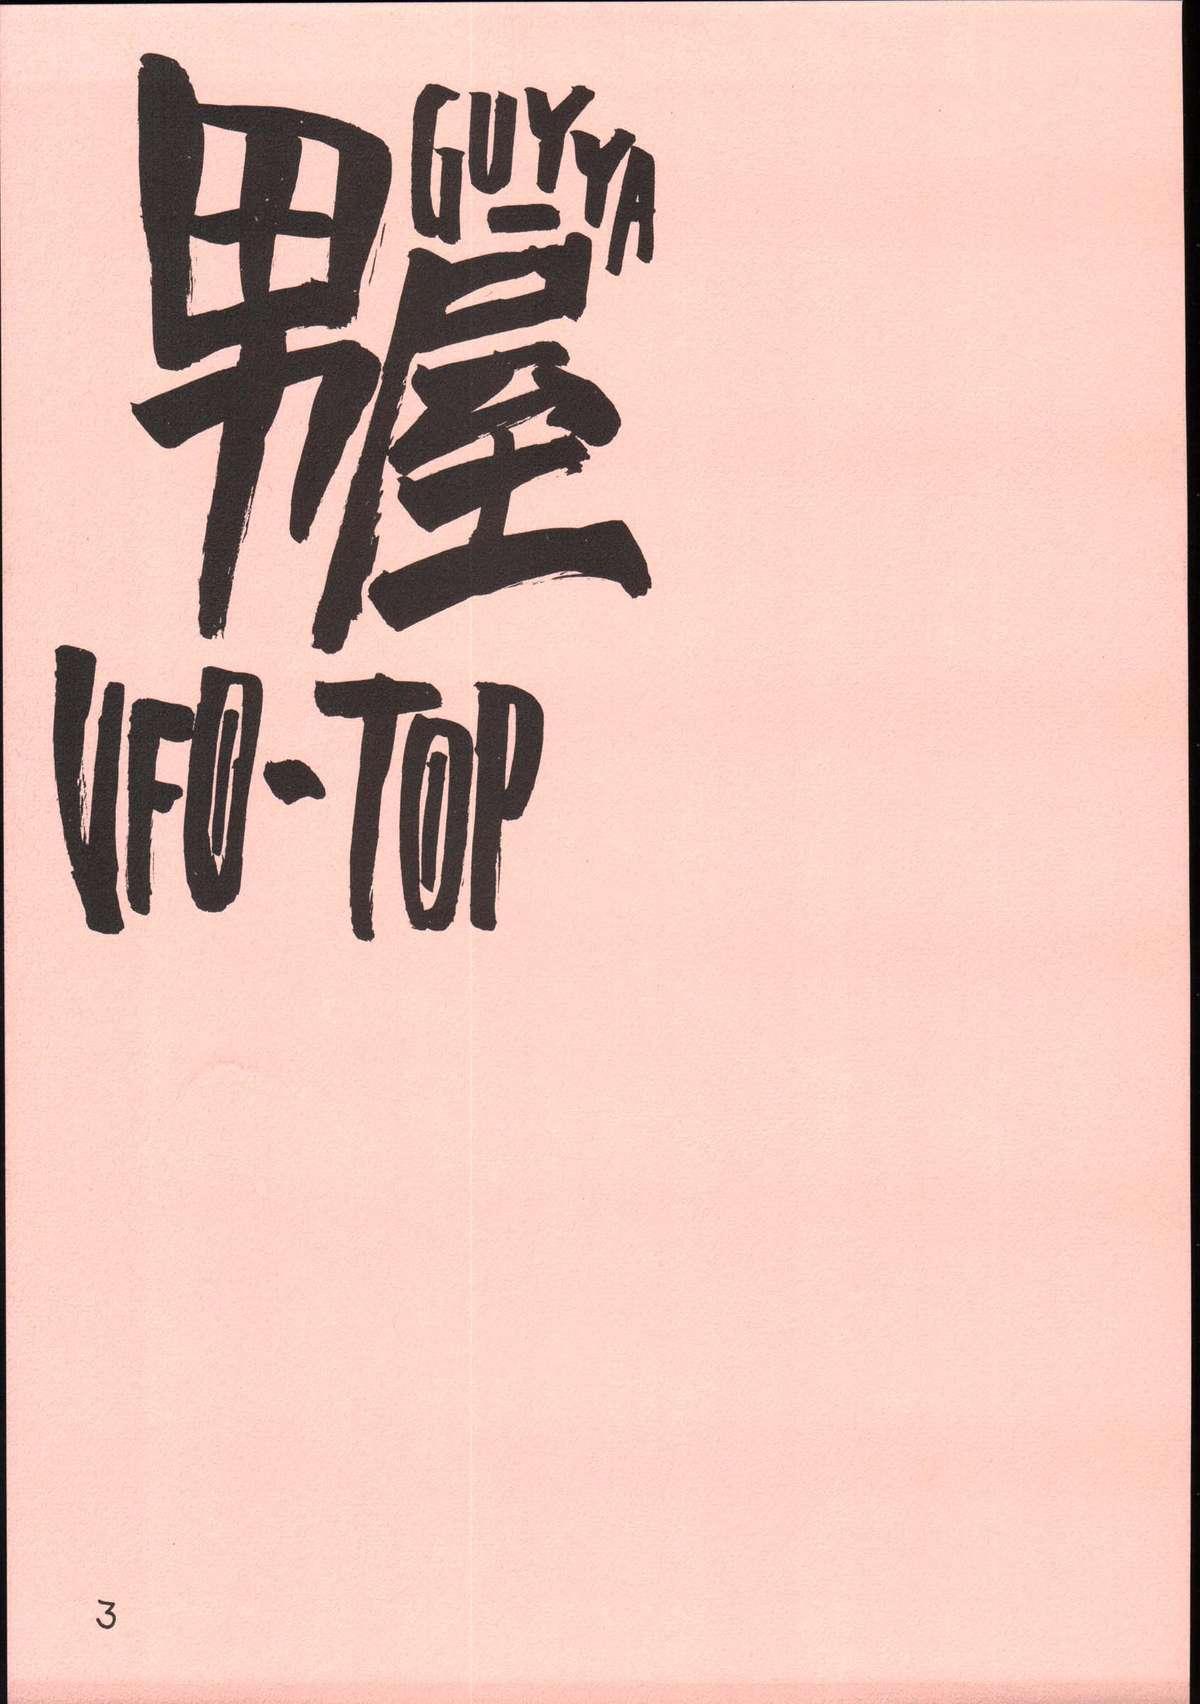 UFO 2000 UFO-TOP 3